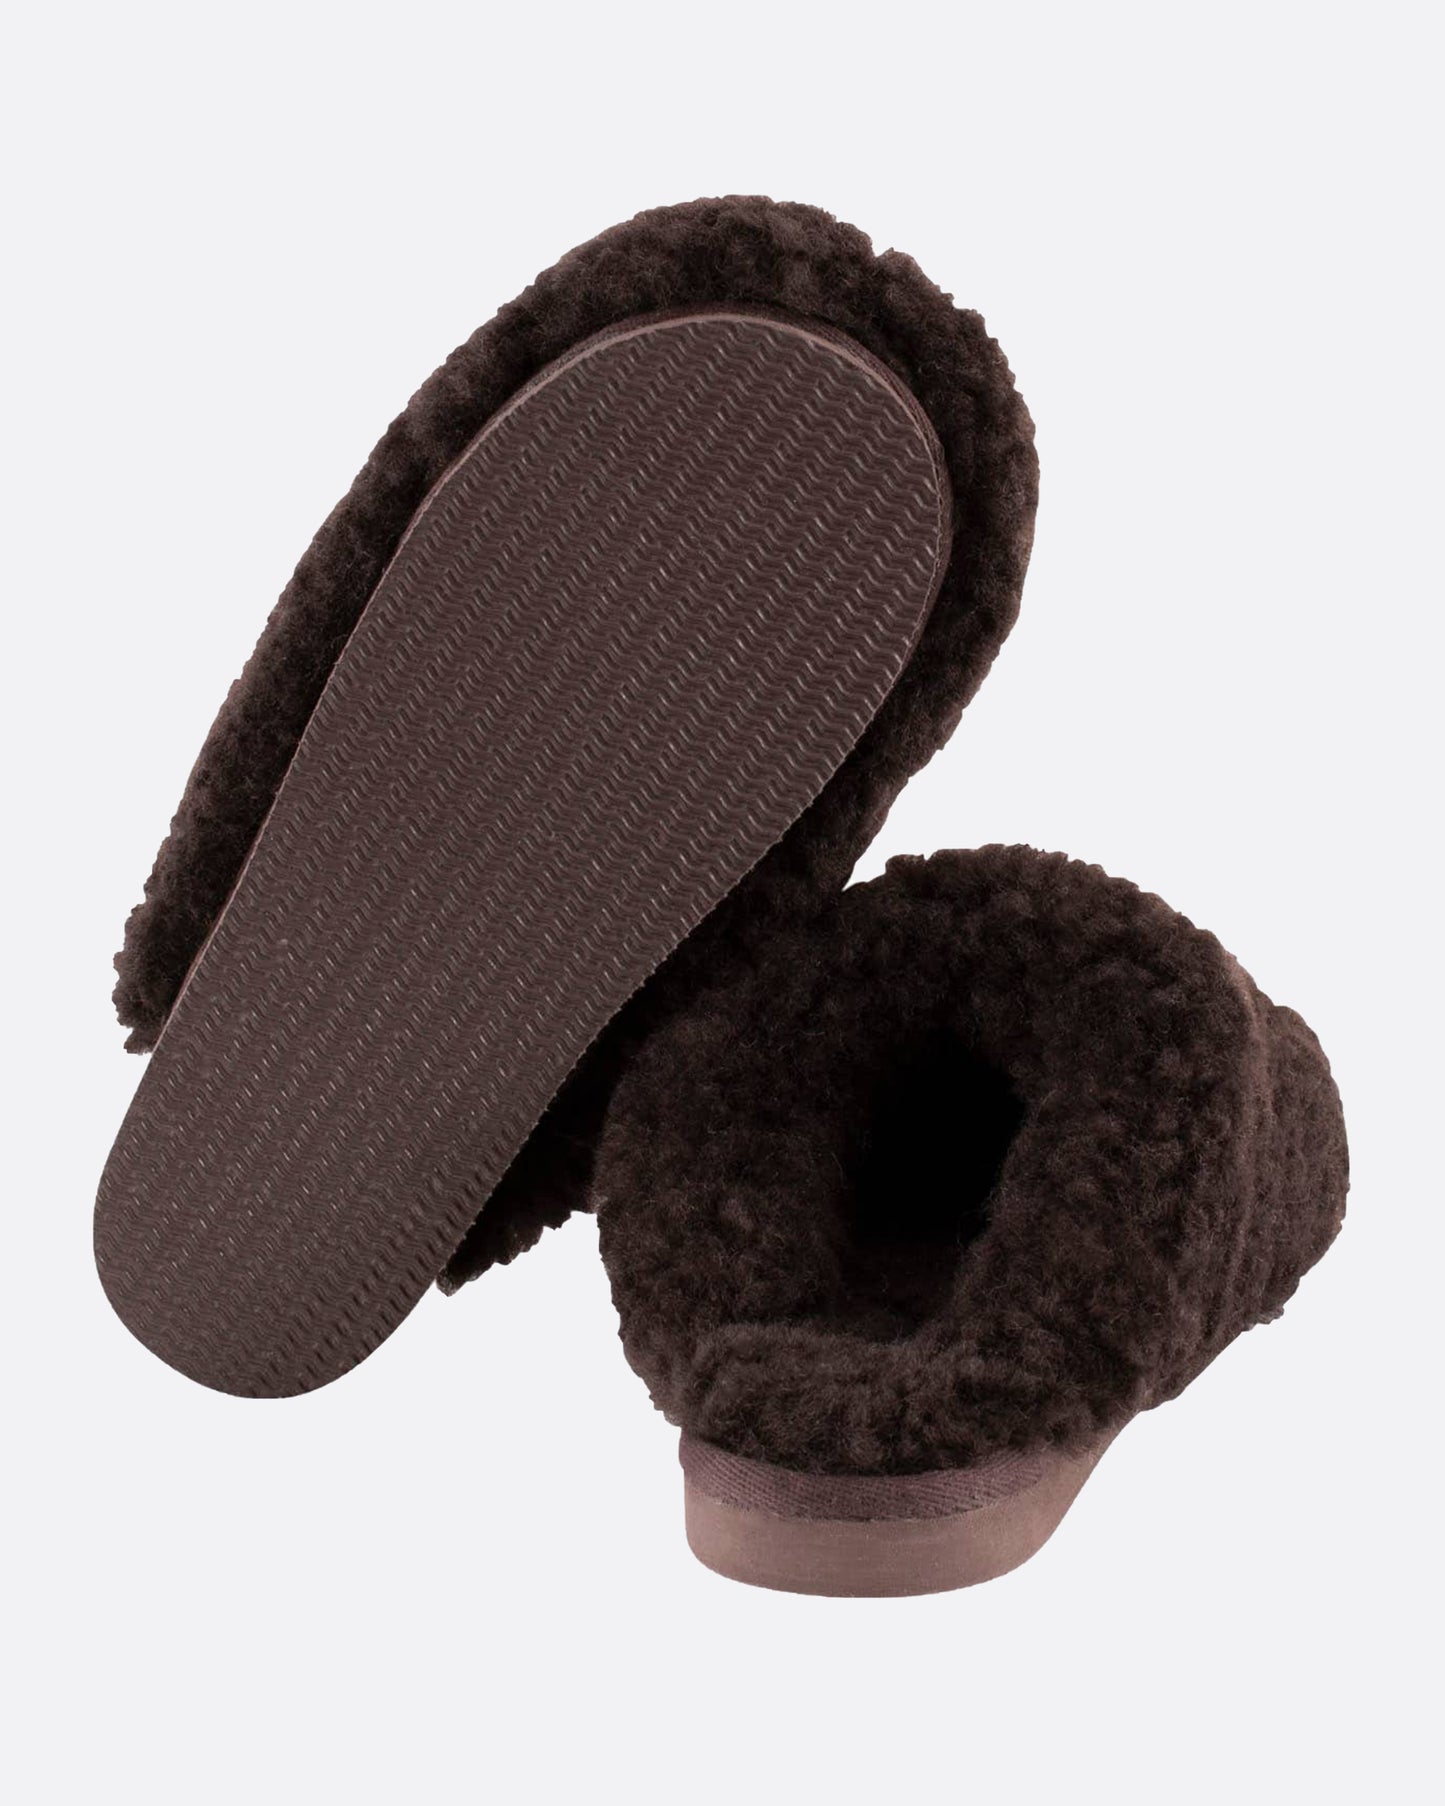 Dark brown sheepskin slipper, shown from the back.